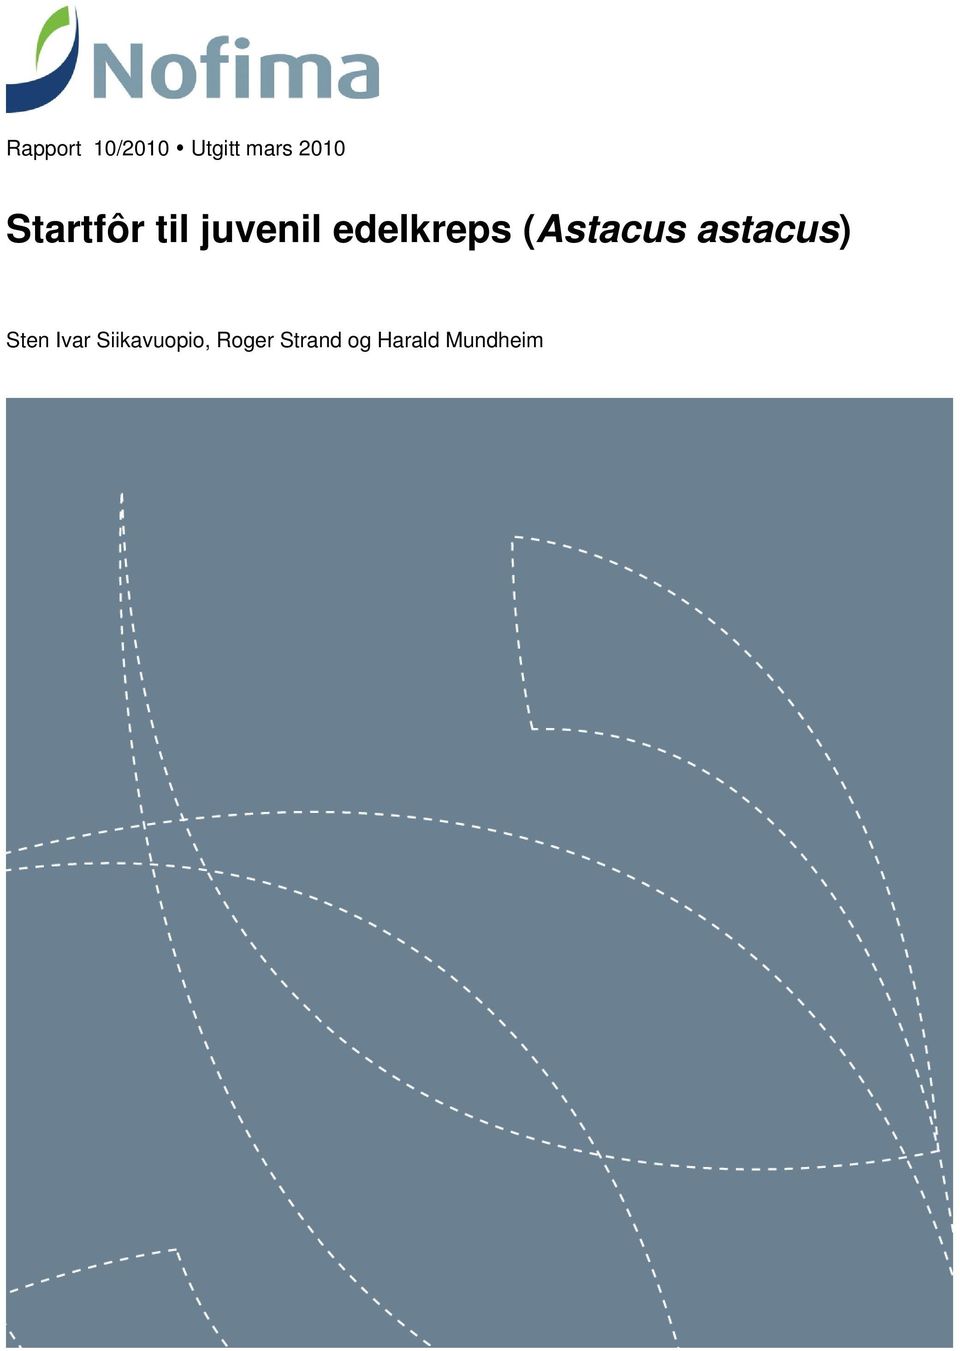 (Astacus astacus) Sten Ivar